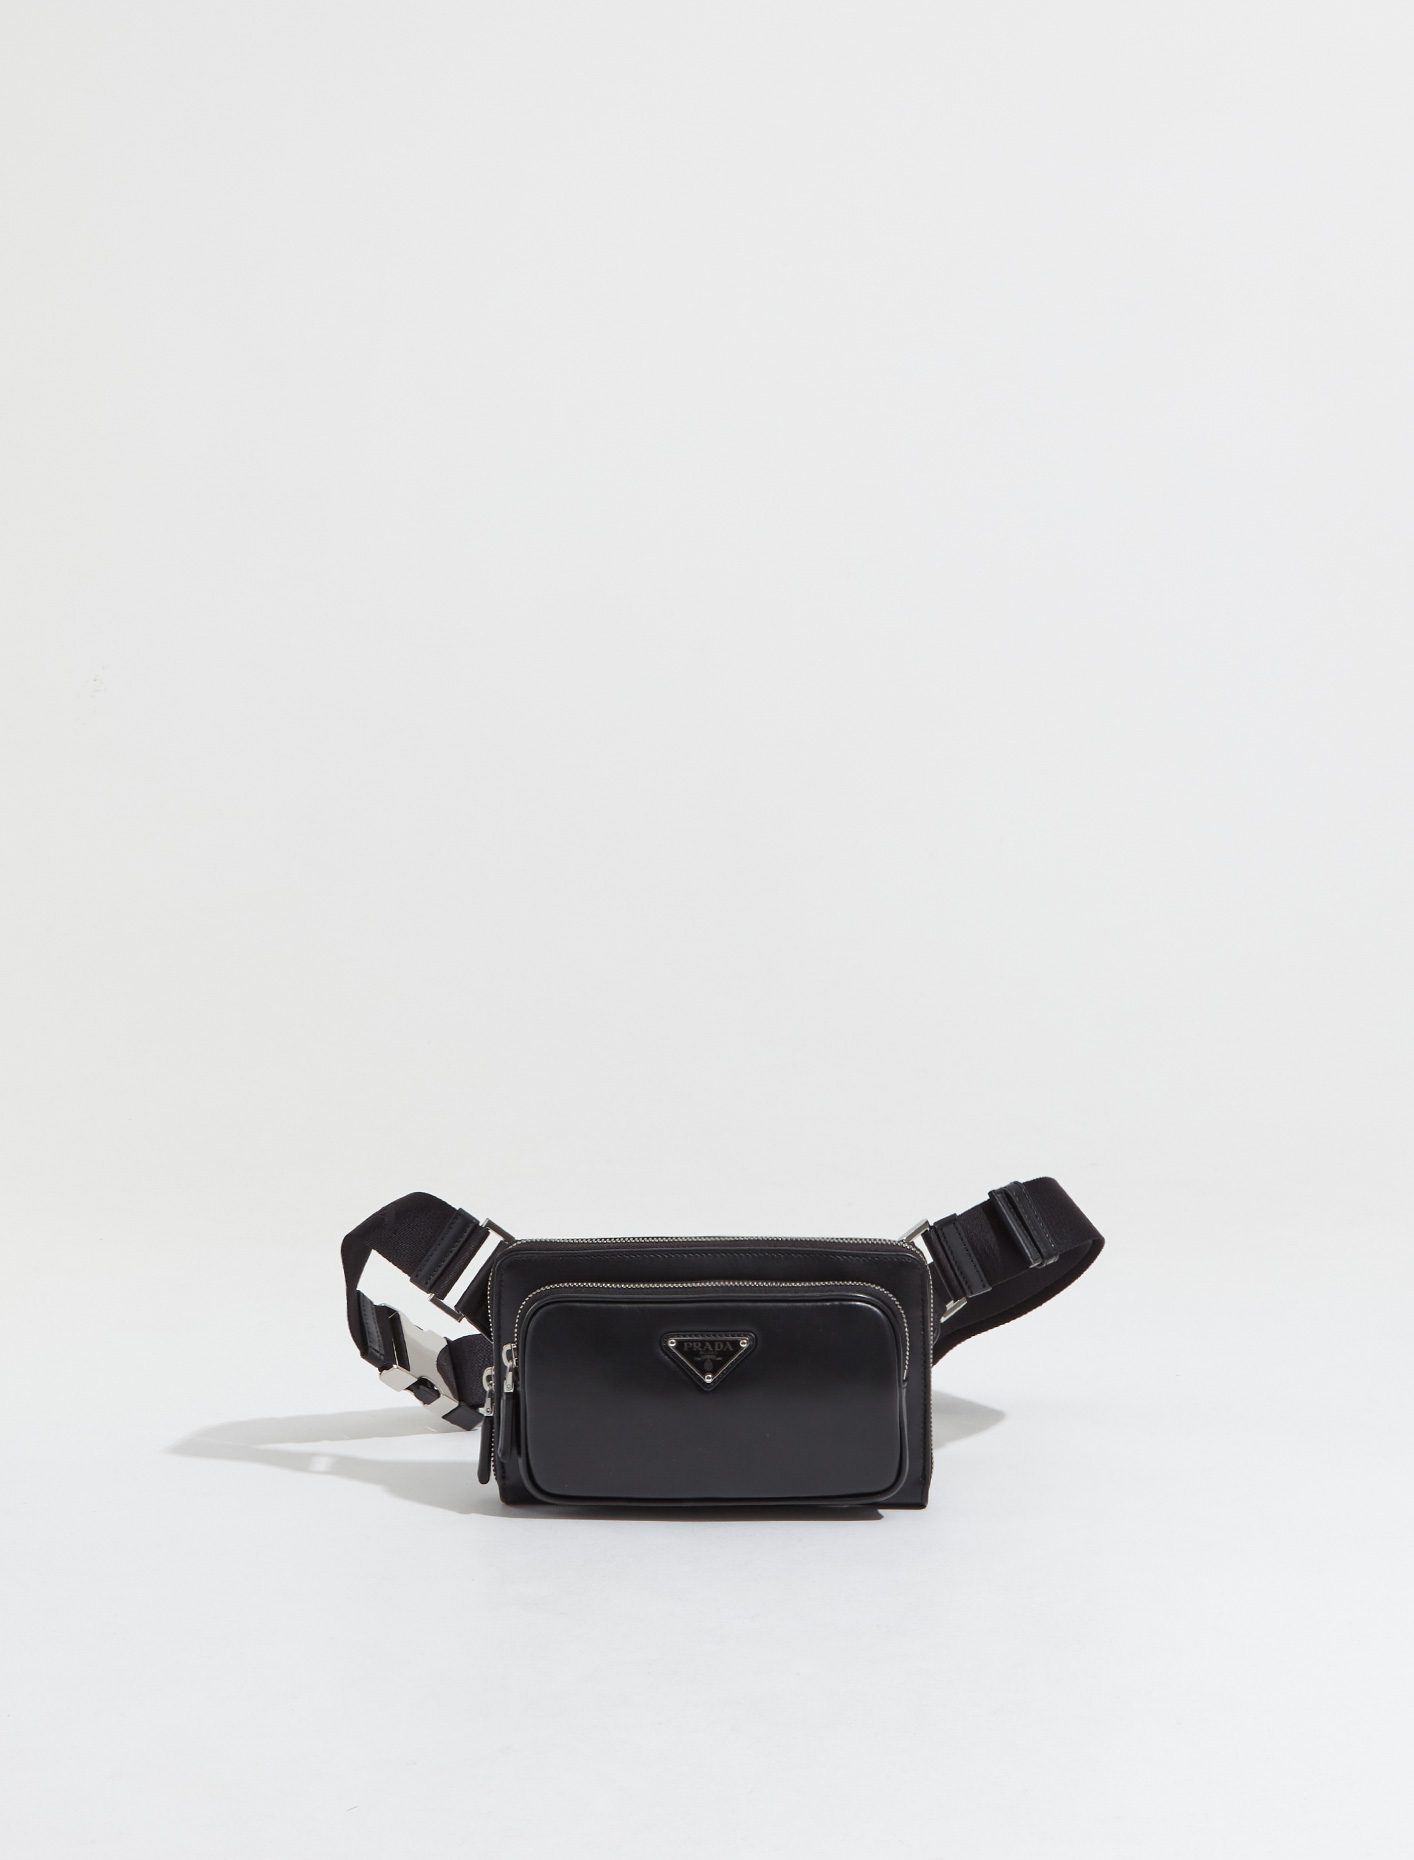 Prada Leather Belt Bag in Black | Voo Store Berlin | Worldwide Shipping